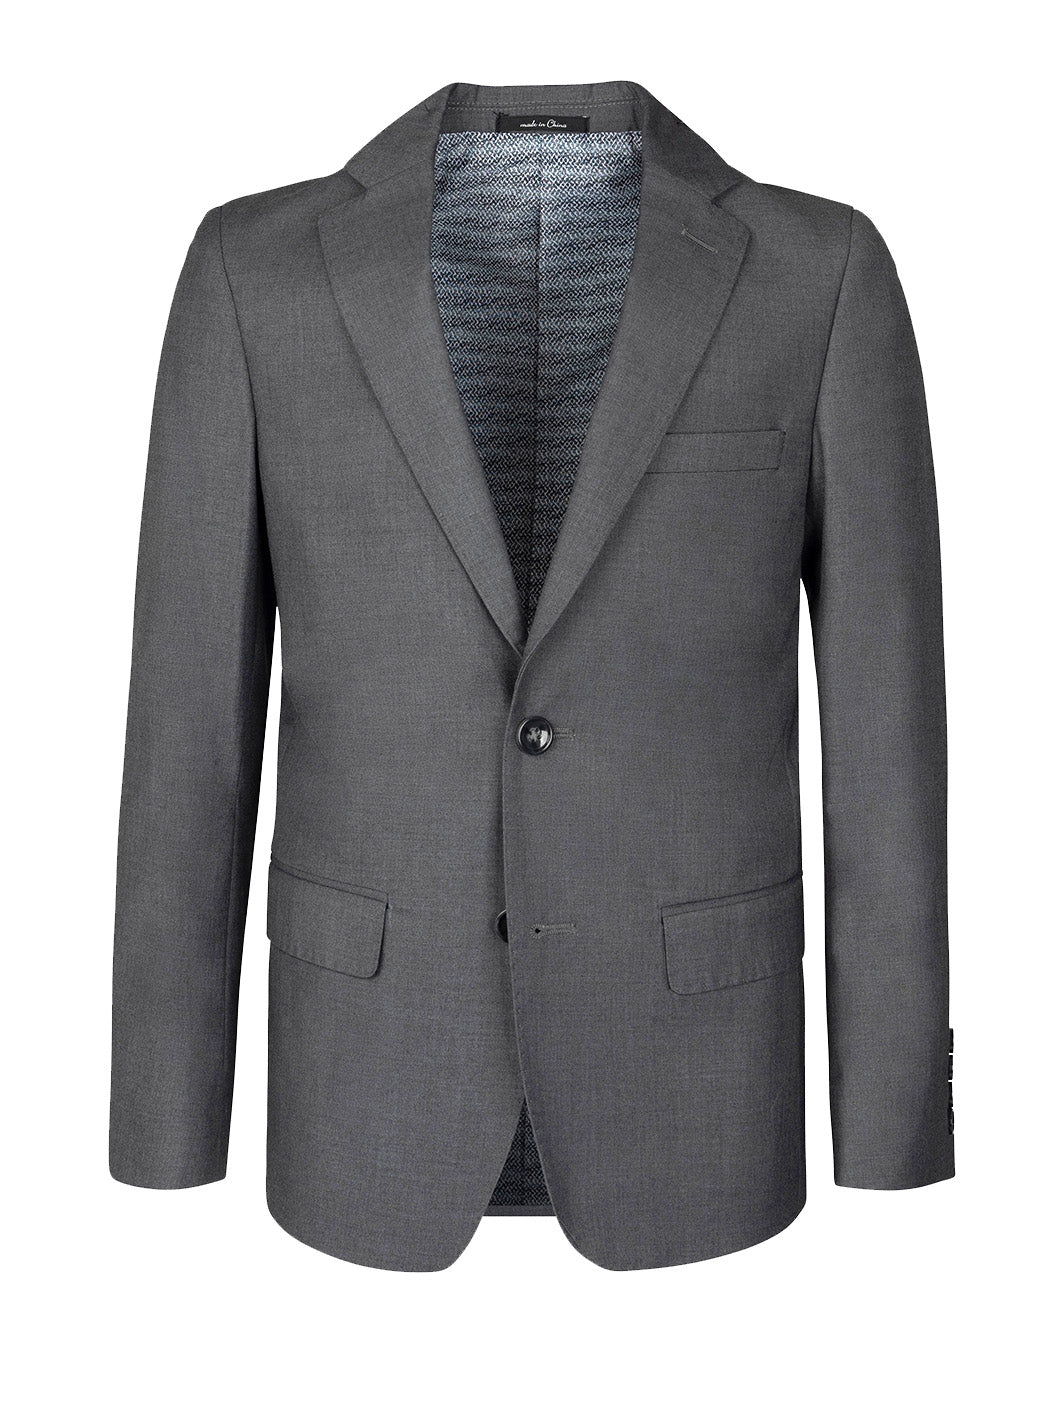 Boy's TR Suit - Grey